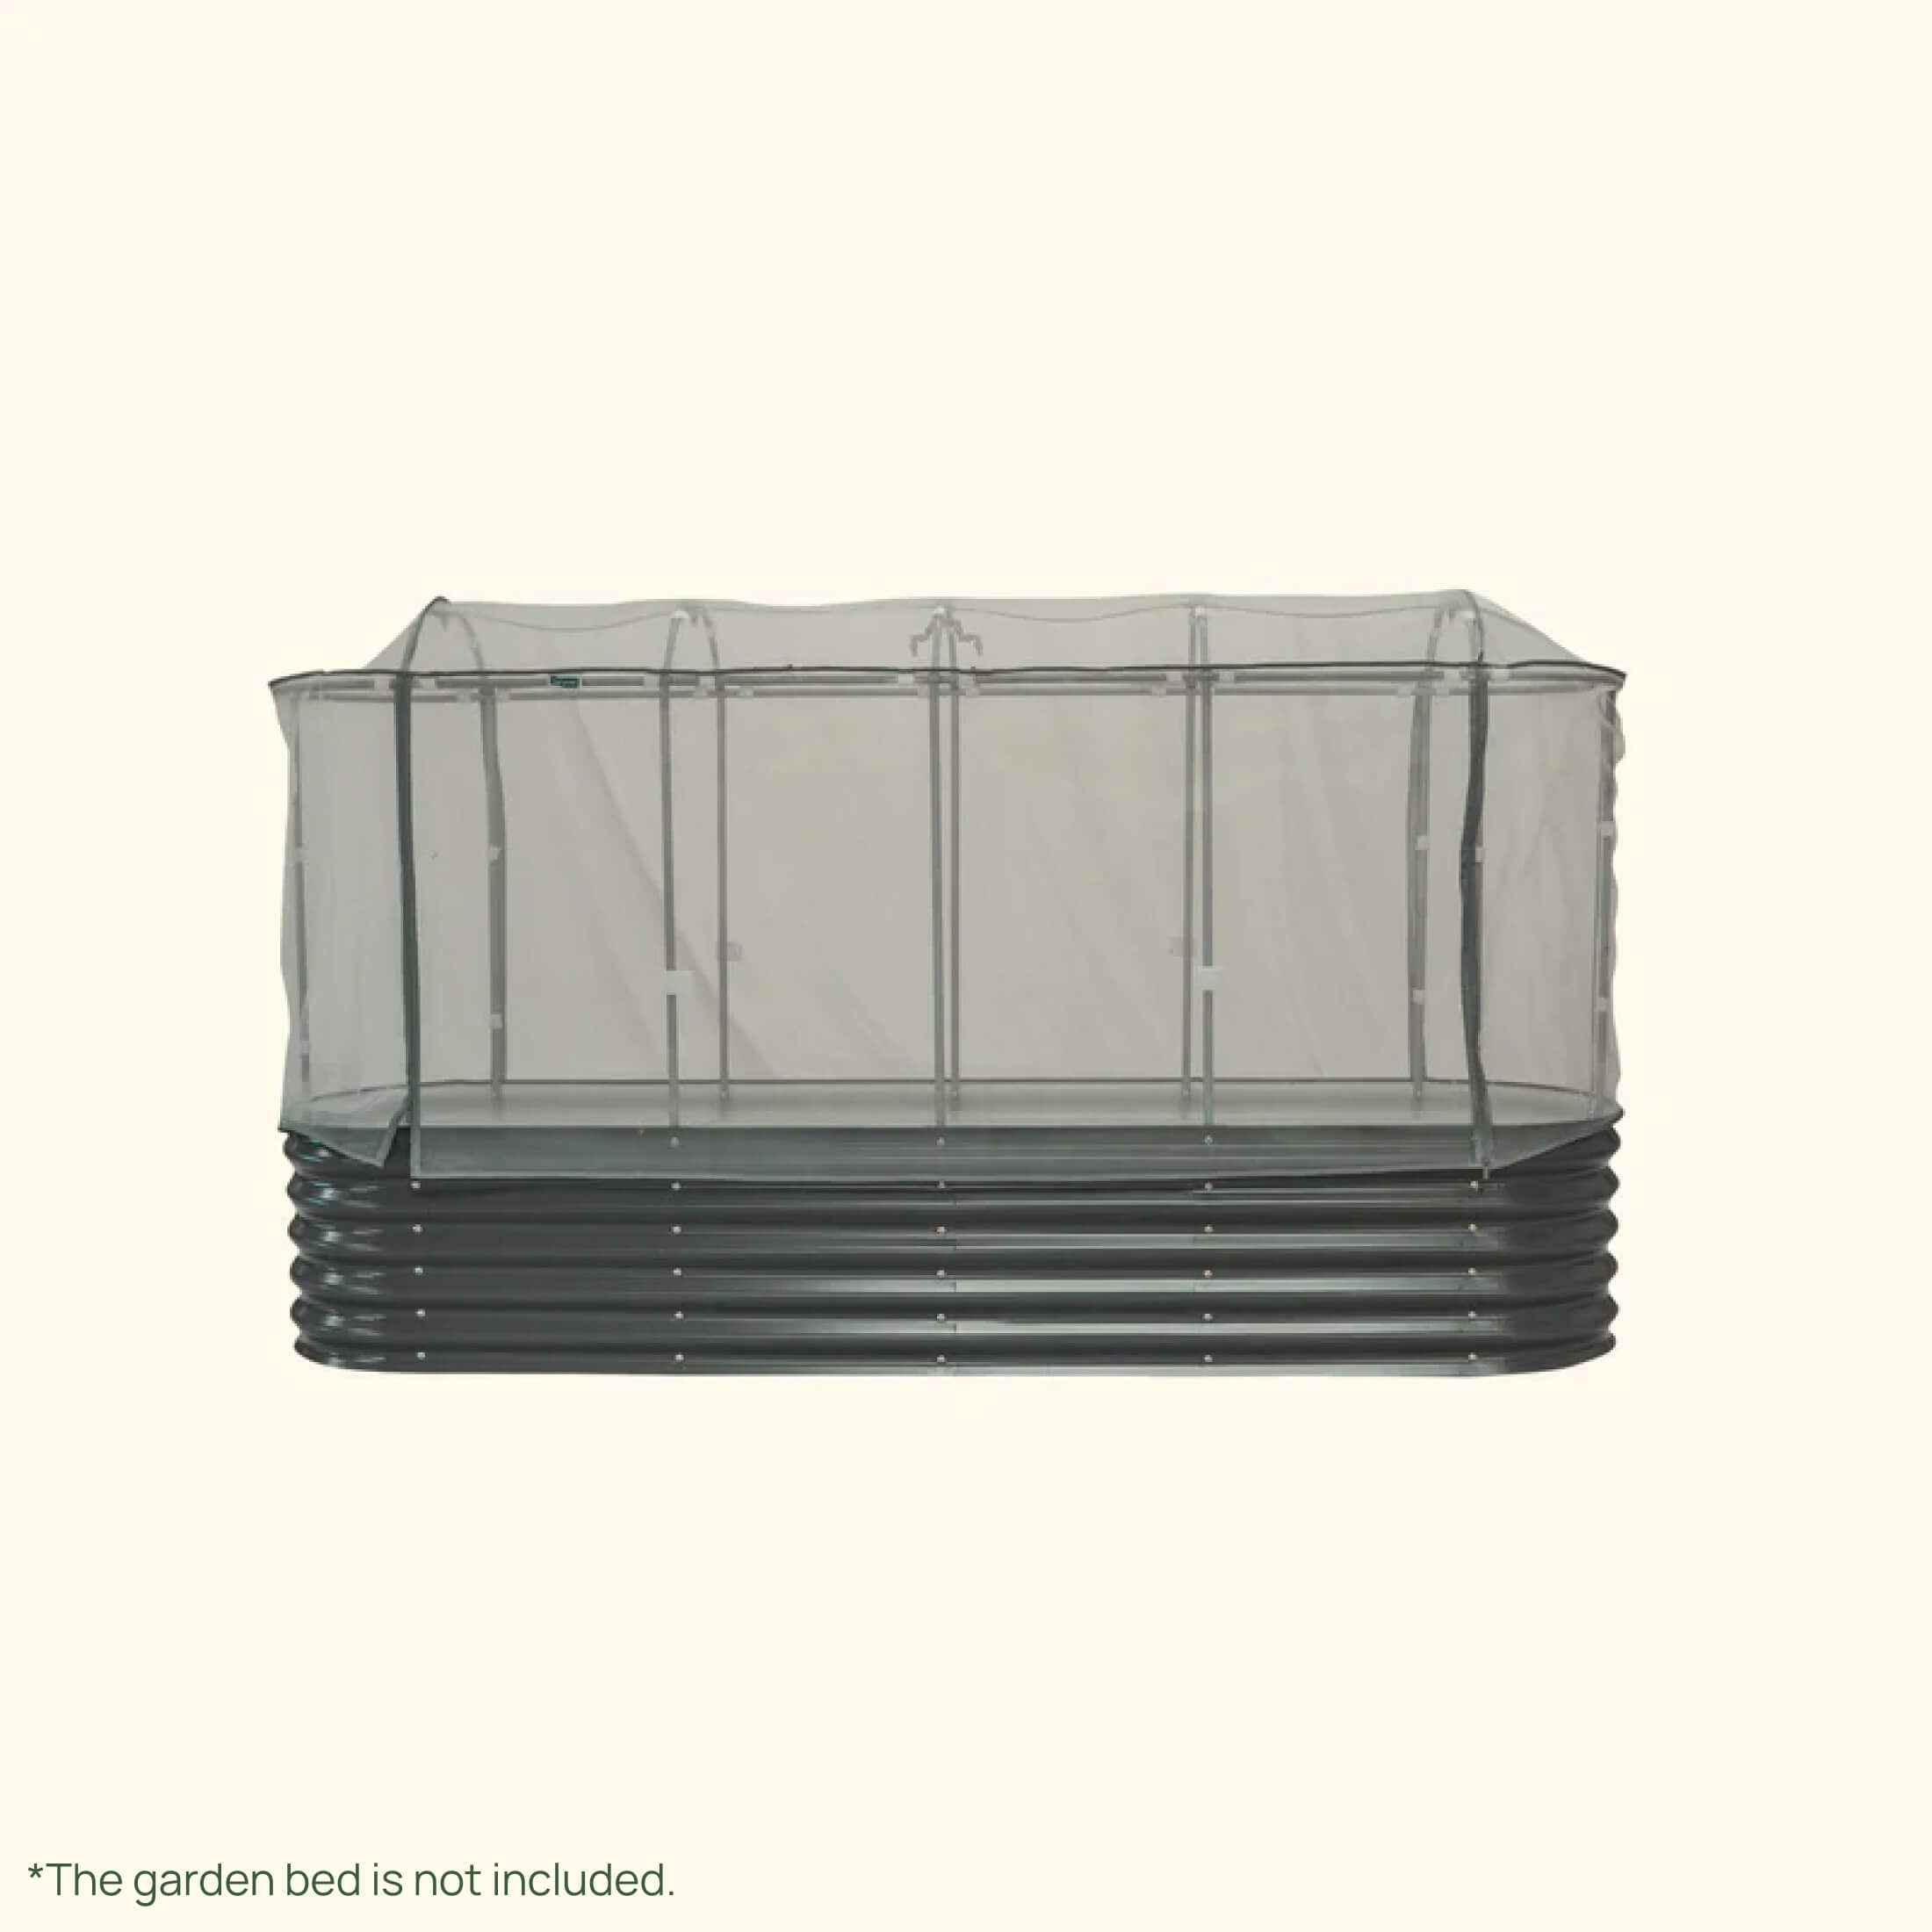 Vego Garden Cover System Gen 2